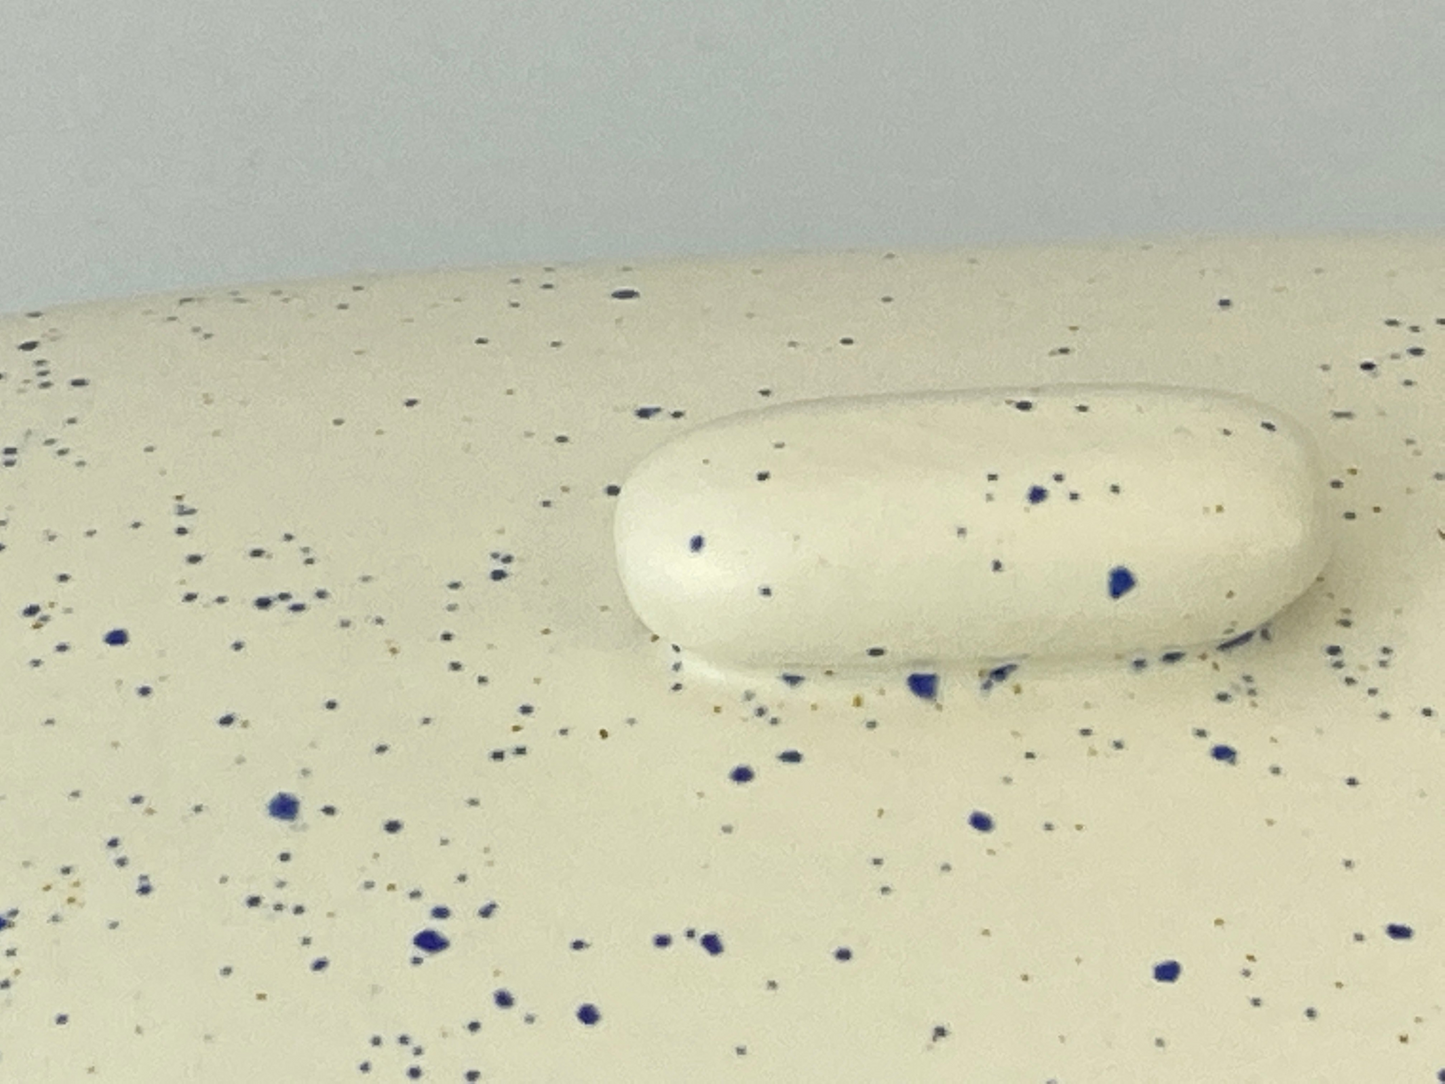 Butter Dish Light Speckled Blue Glaze